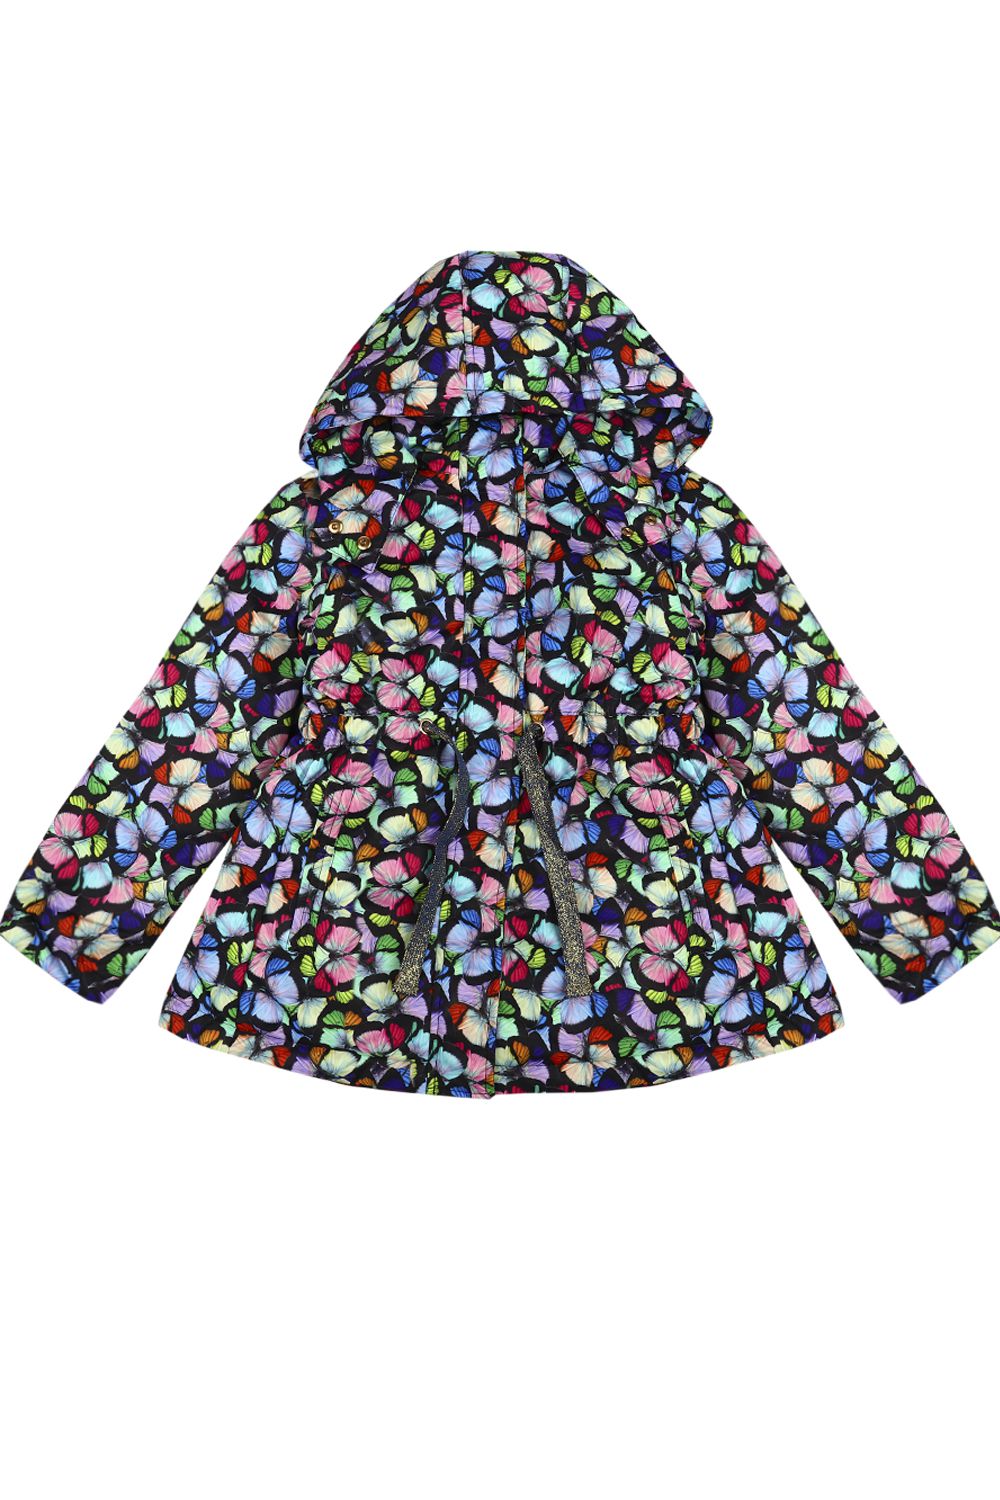 Куртка Noble People, размер 104, цвет разноцветный ADBG-06SS20 (28607-533) - фото 2